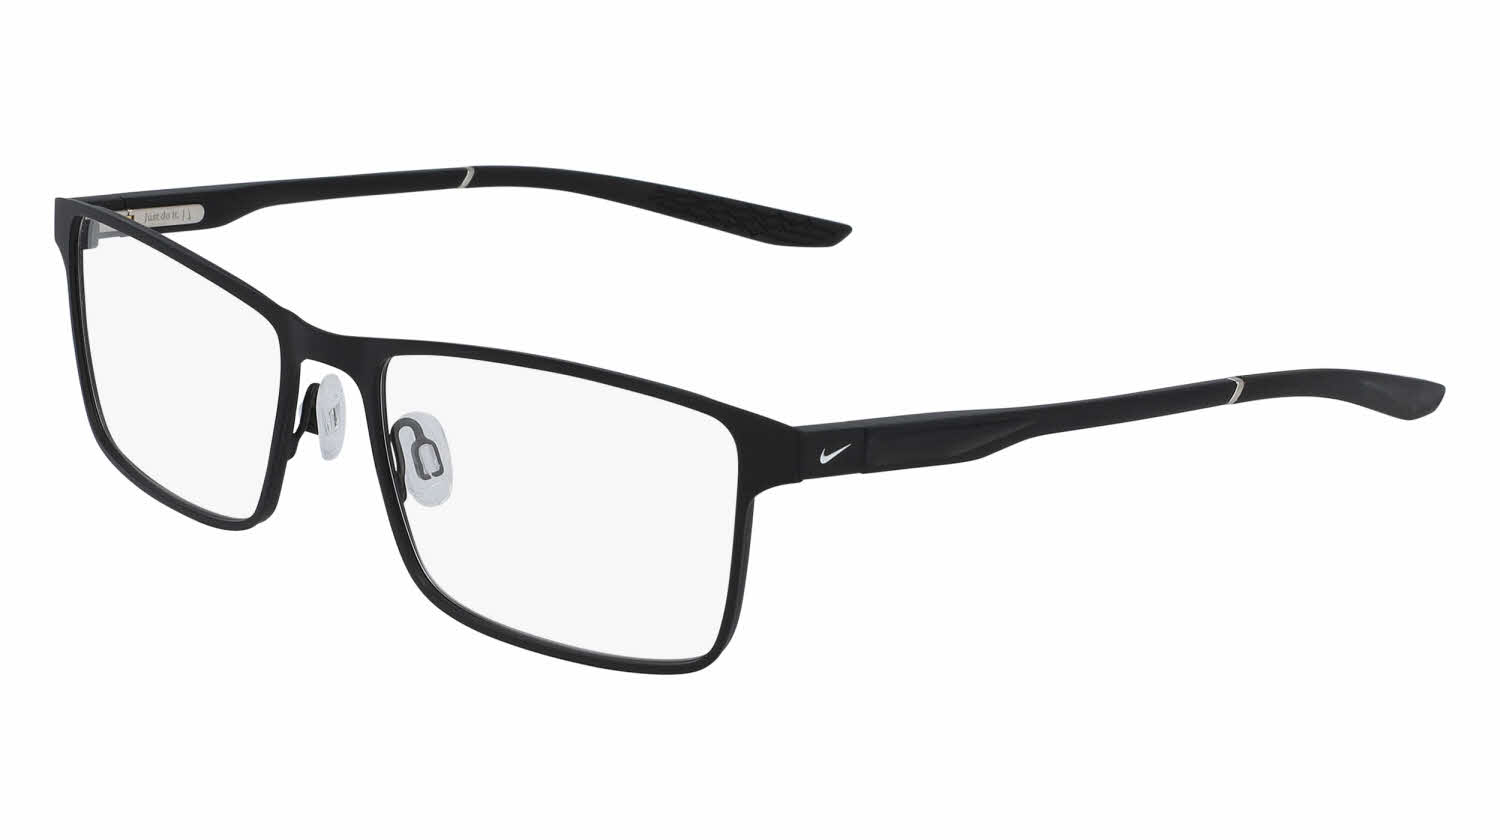 Nike 8047 Eyeglasses